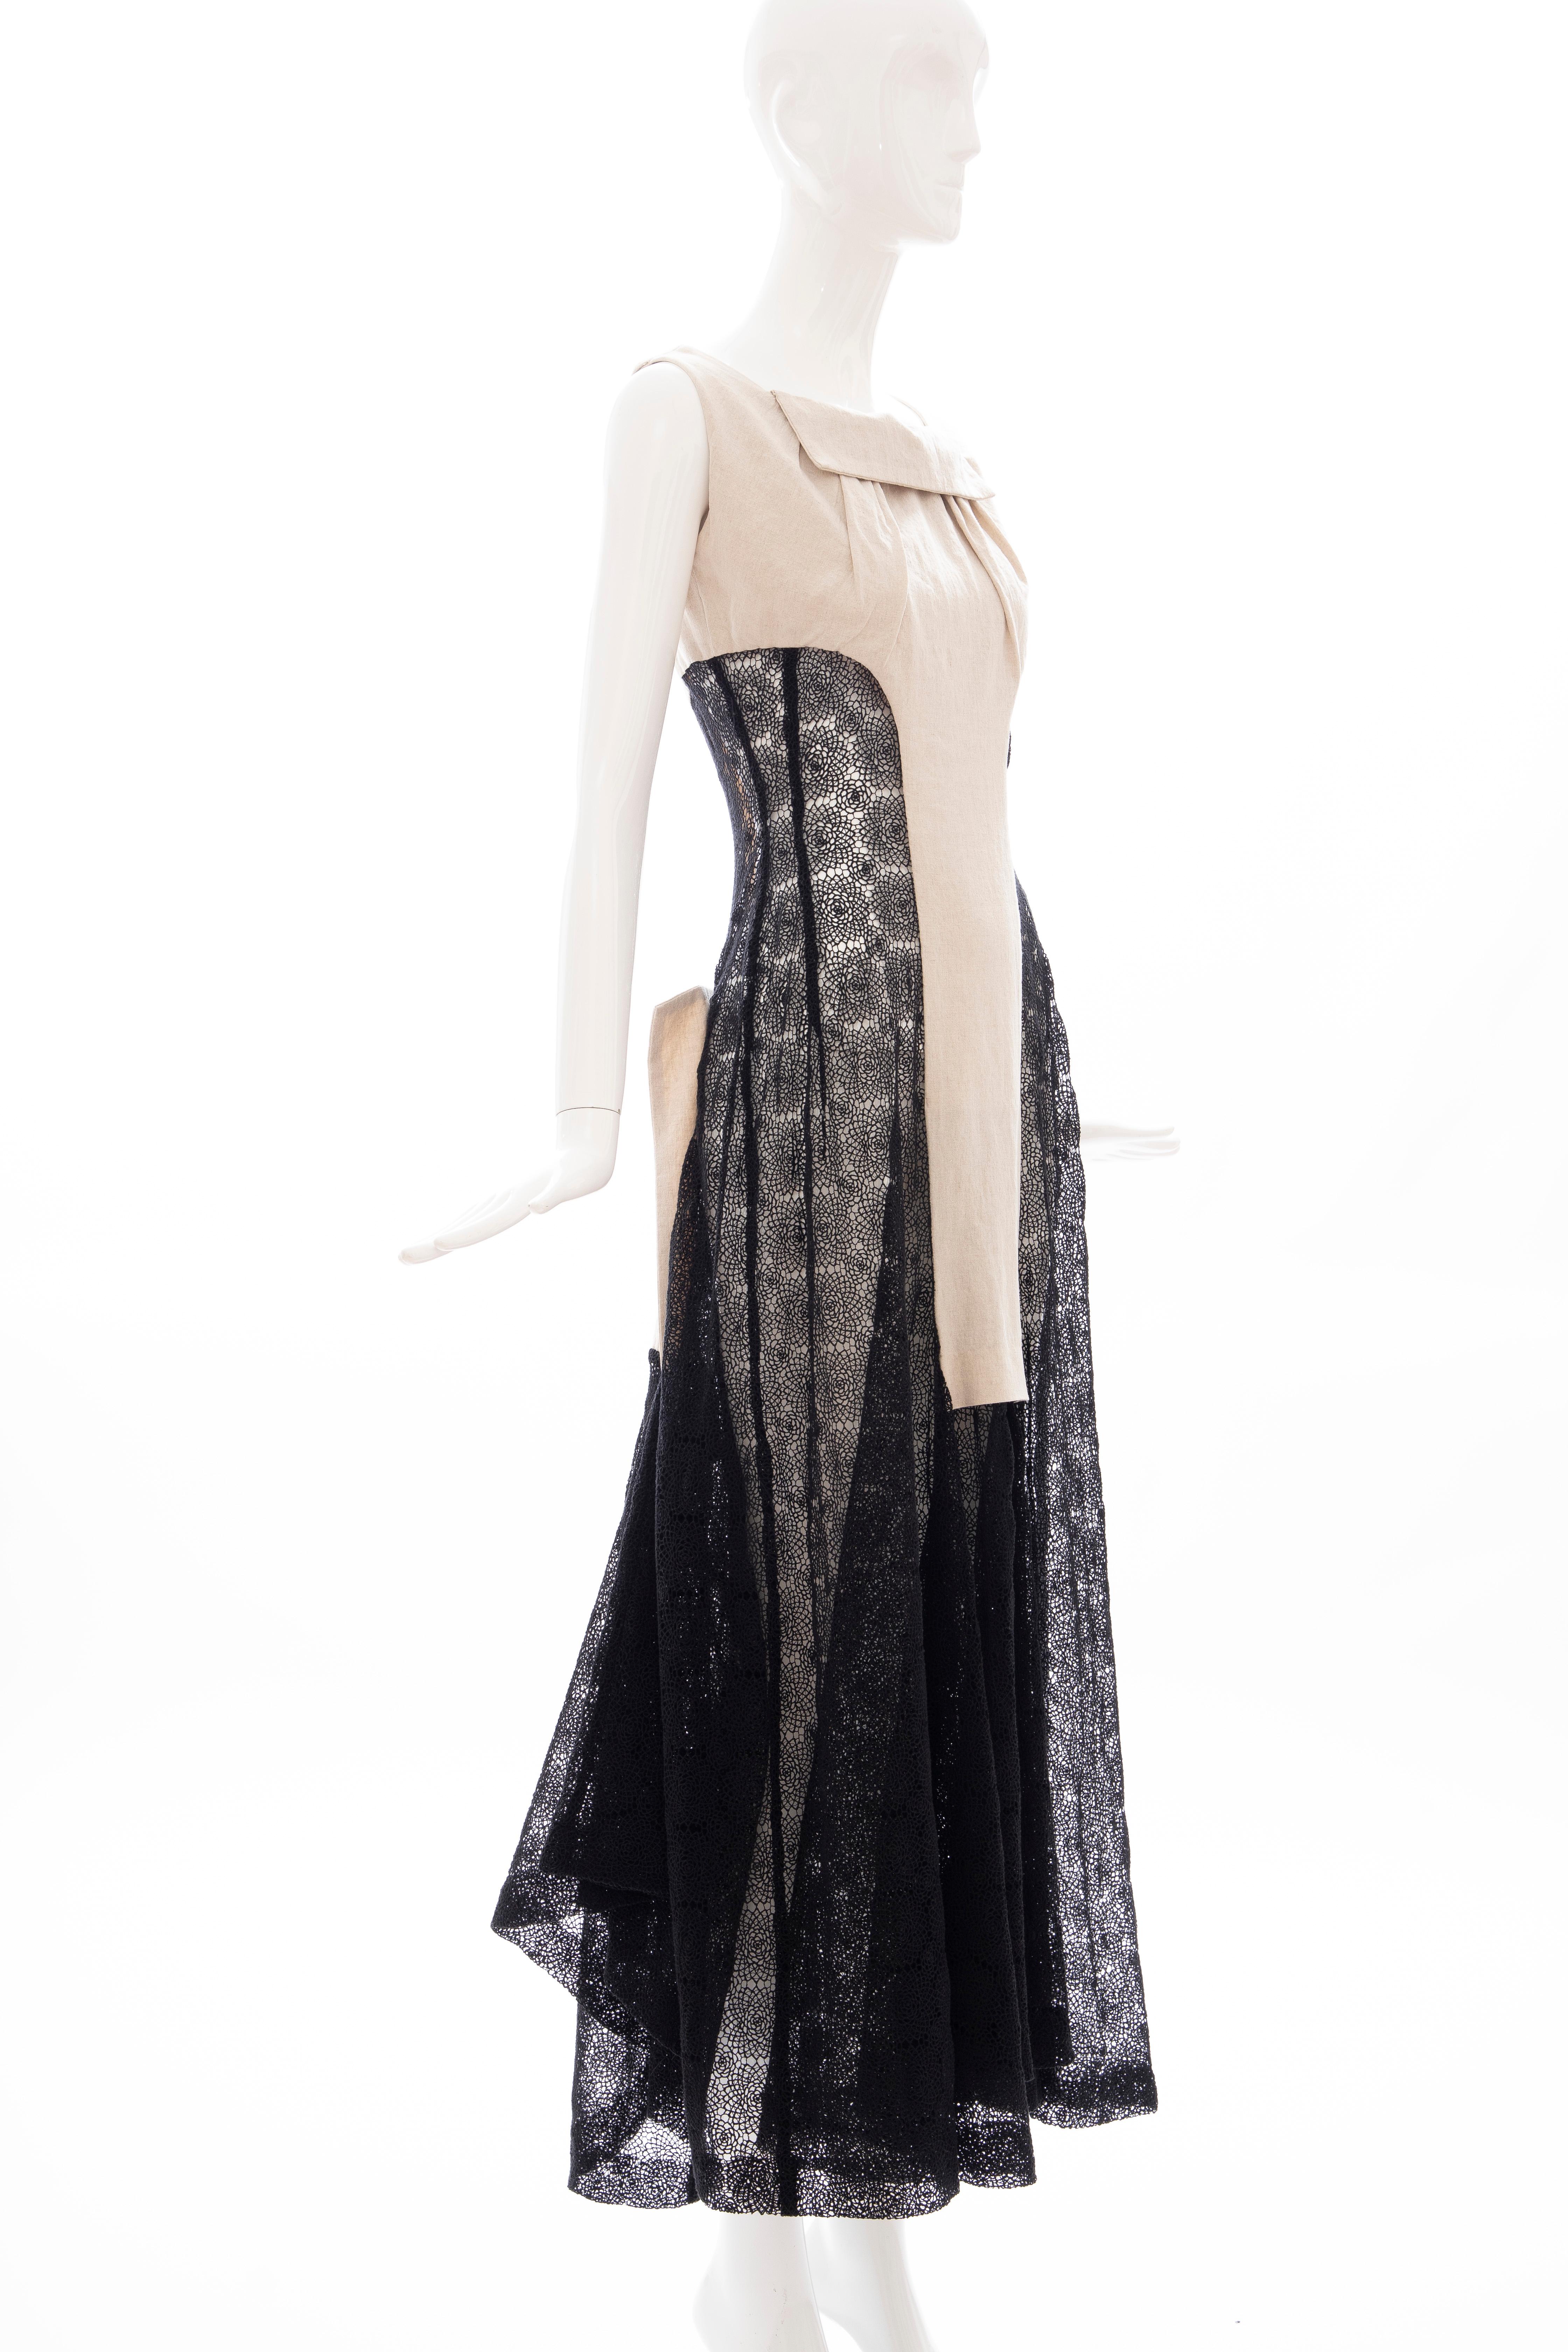 Yohji Yamamoto Runway Black Cotton Lace & Natural Linen Dress, Spring 2005 1